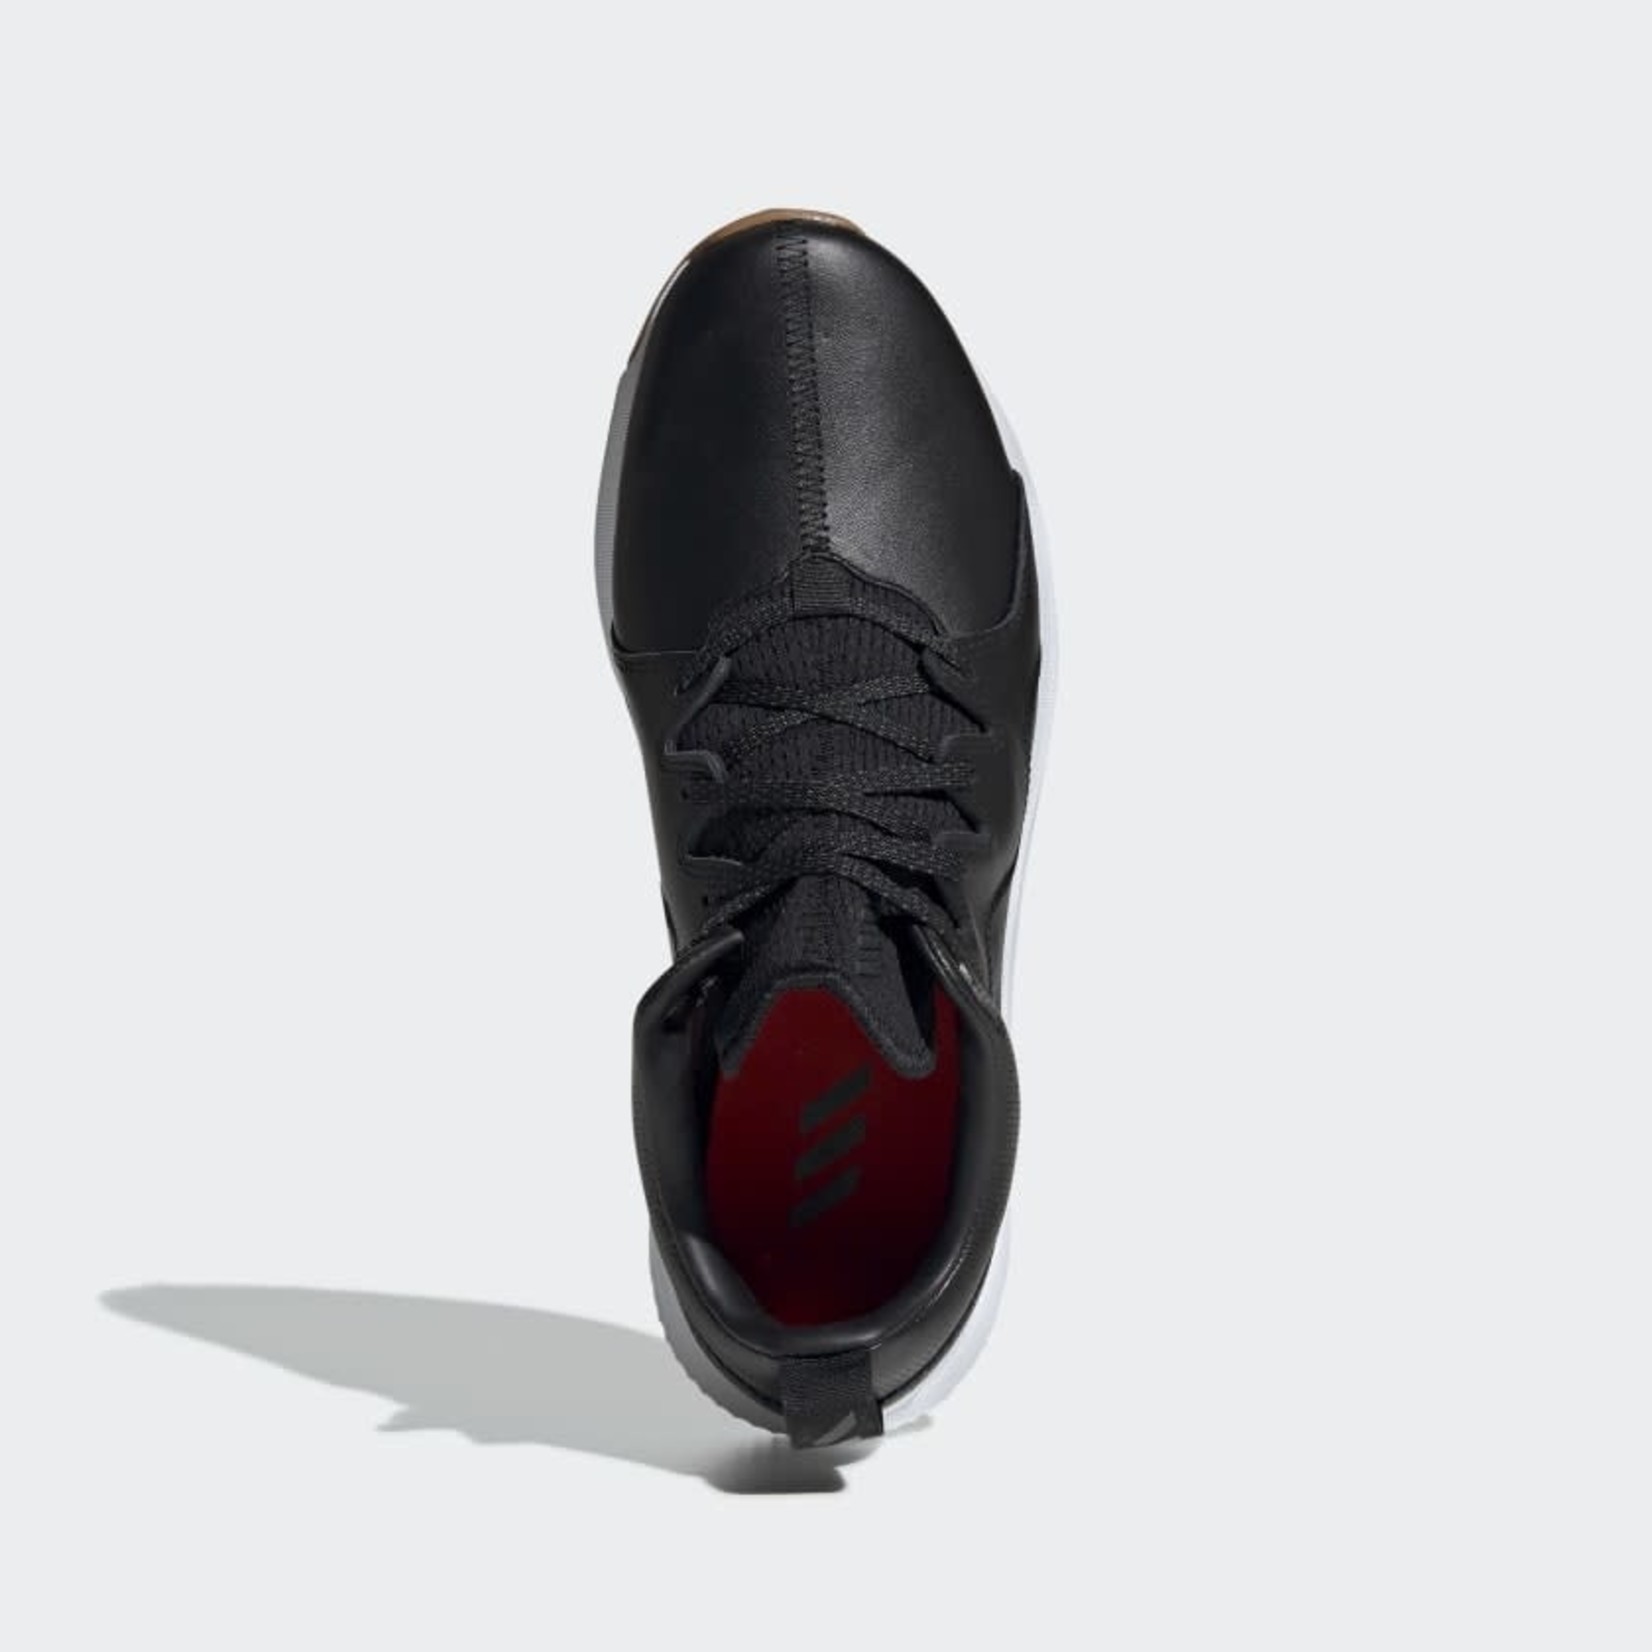 Adidas Men's Adidas Adicross PPF Spikeless Golf Shoe Black